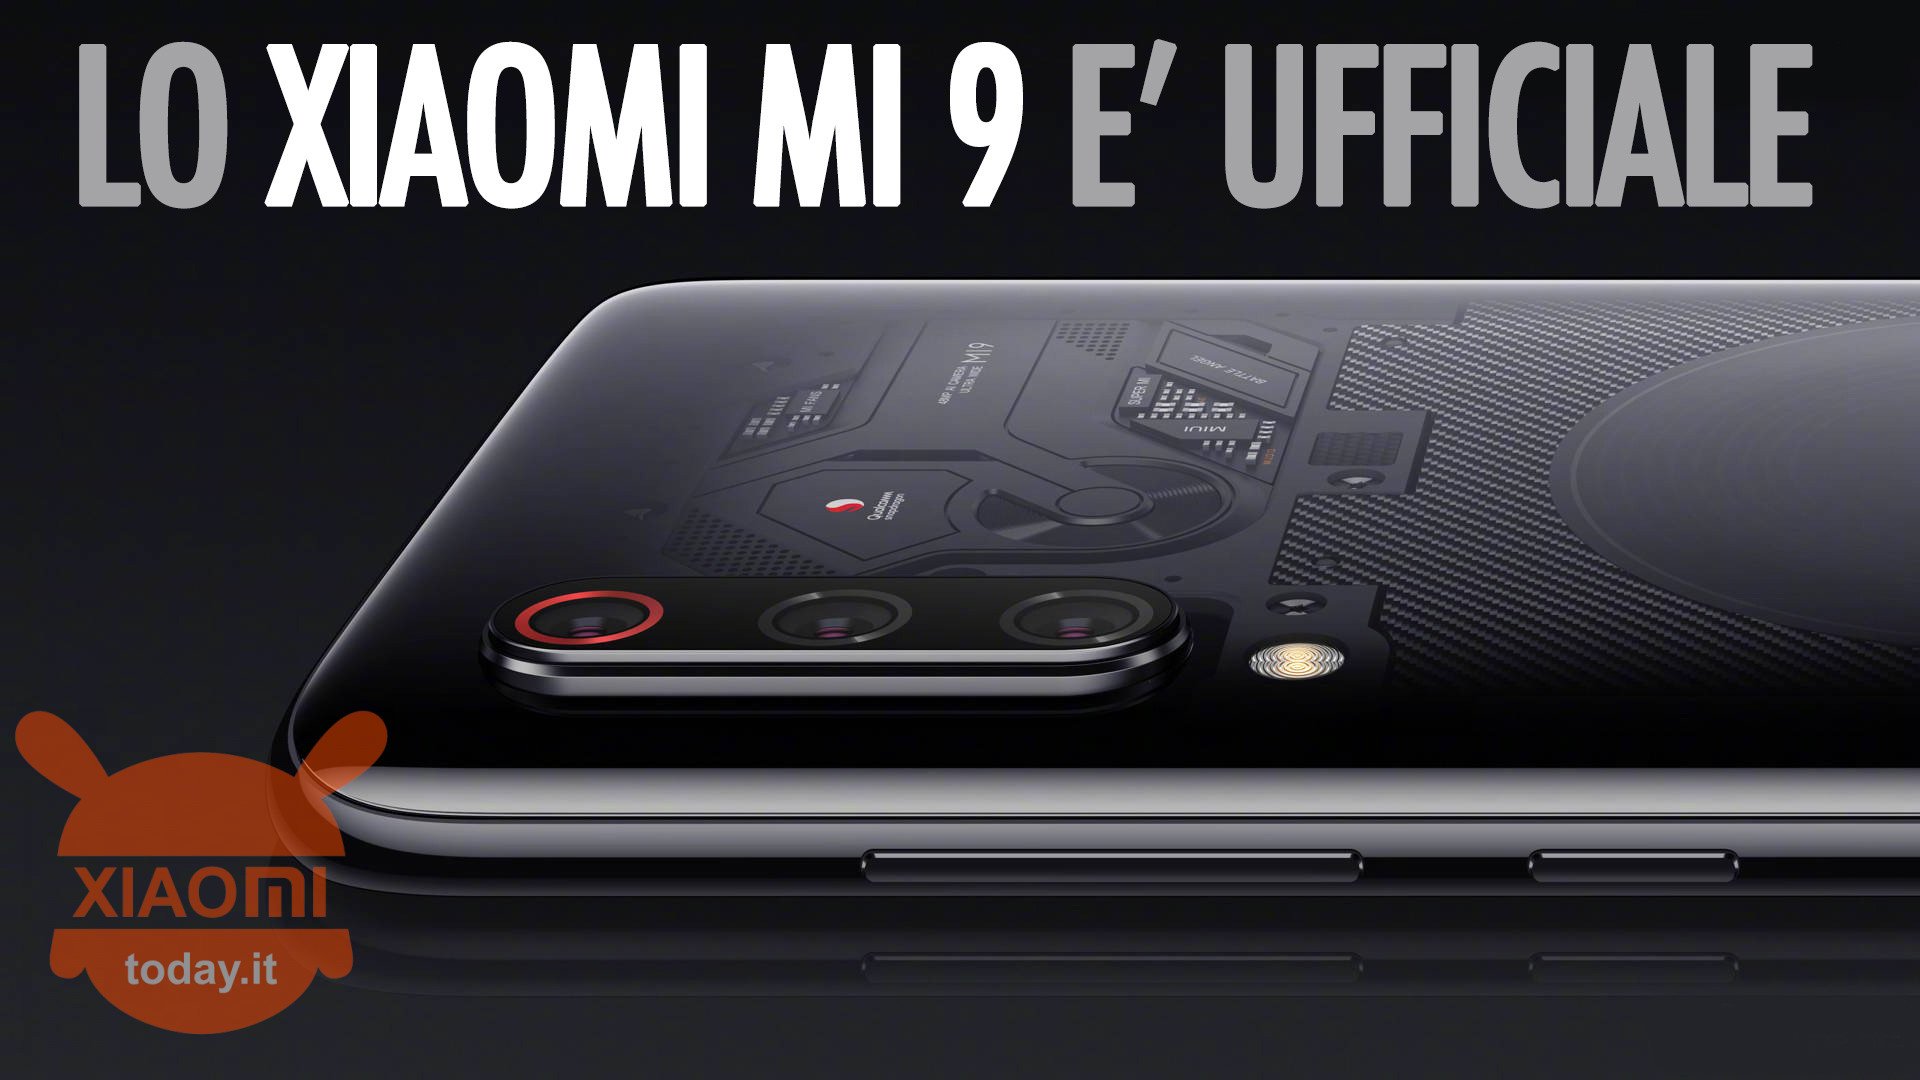 Spécifications techniques de Xiaomi Mi 9